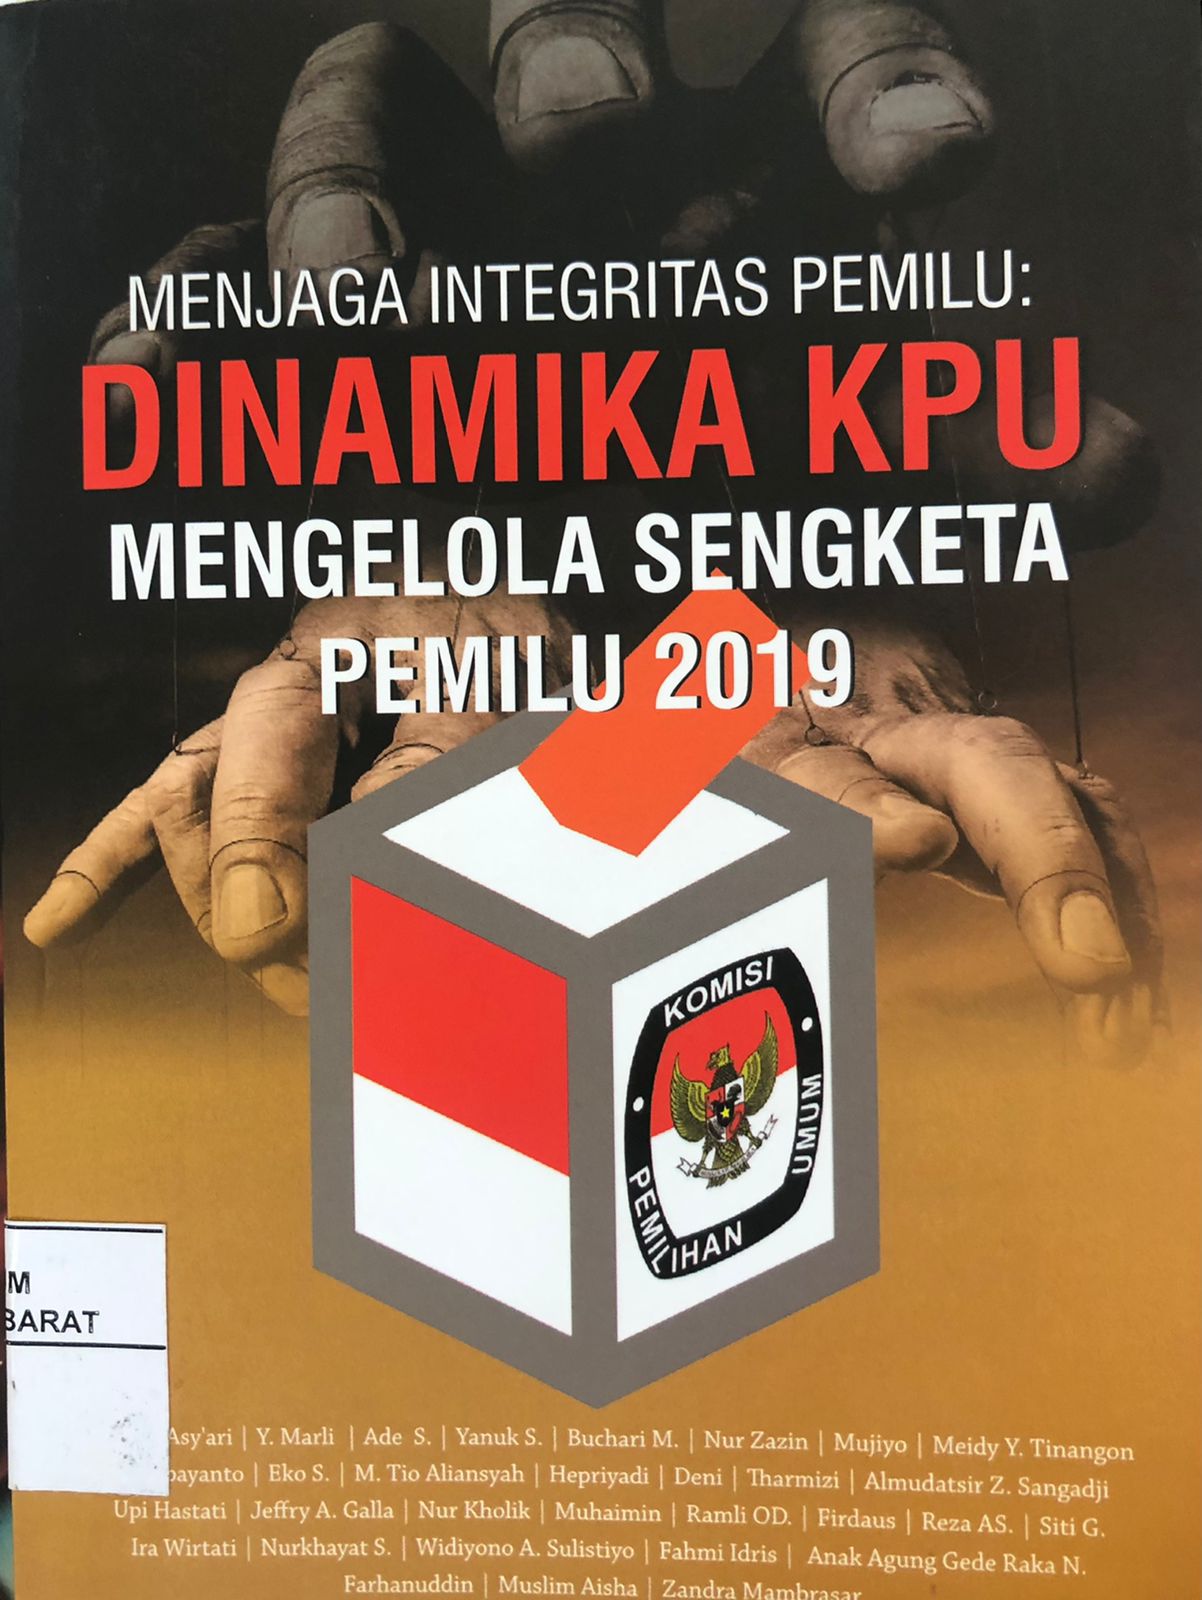 Menjaga Integritas Pemilu : Dinamika KPU Mengelola sengketa pemilu 2019